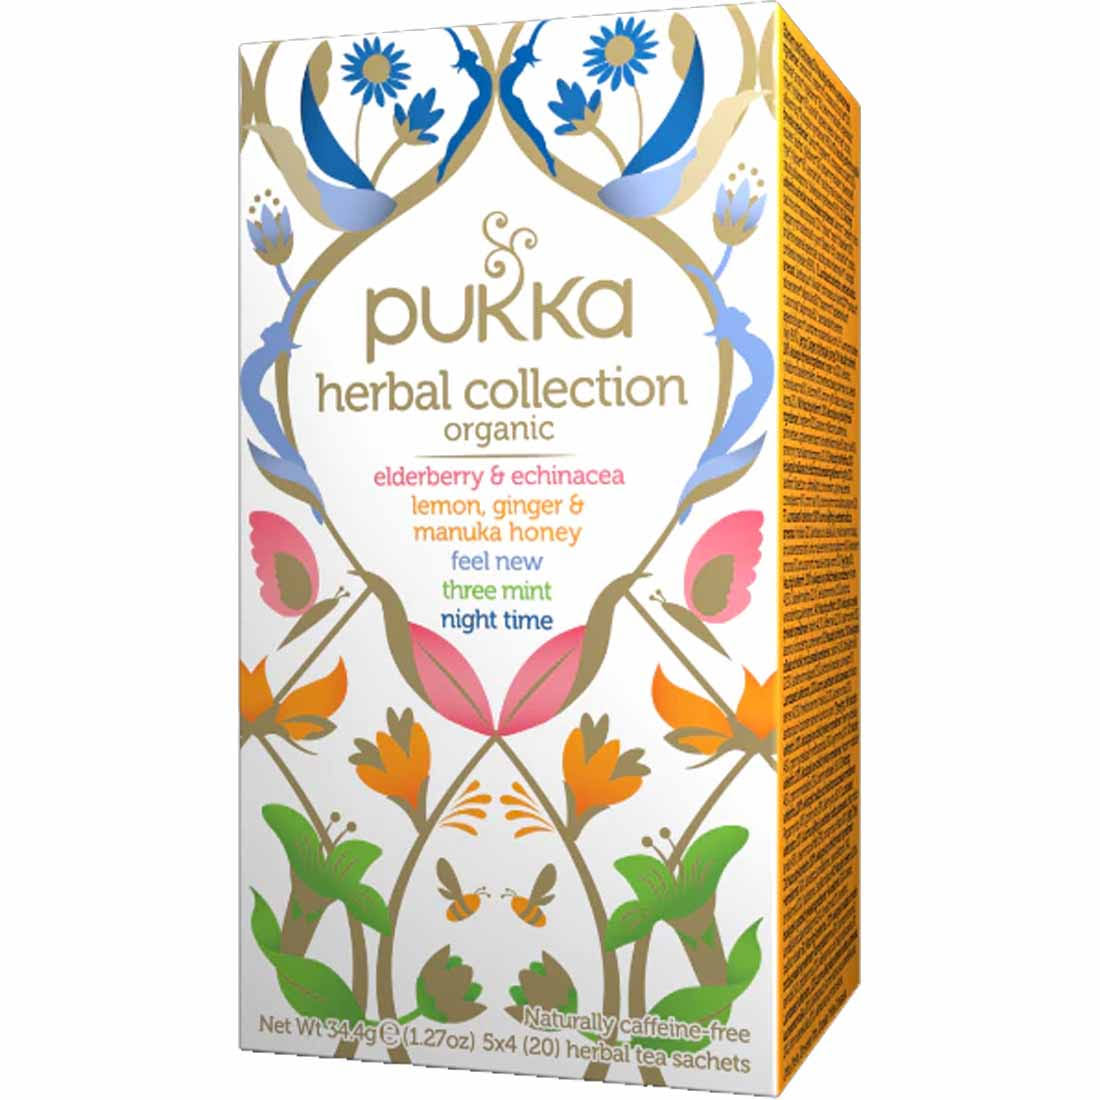 Pukka Herbal Tea Collection Bags - 1 Box - 20 Tea Bags